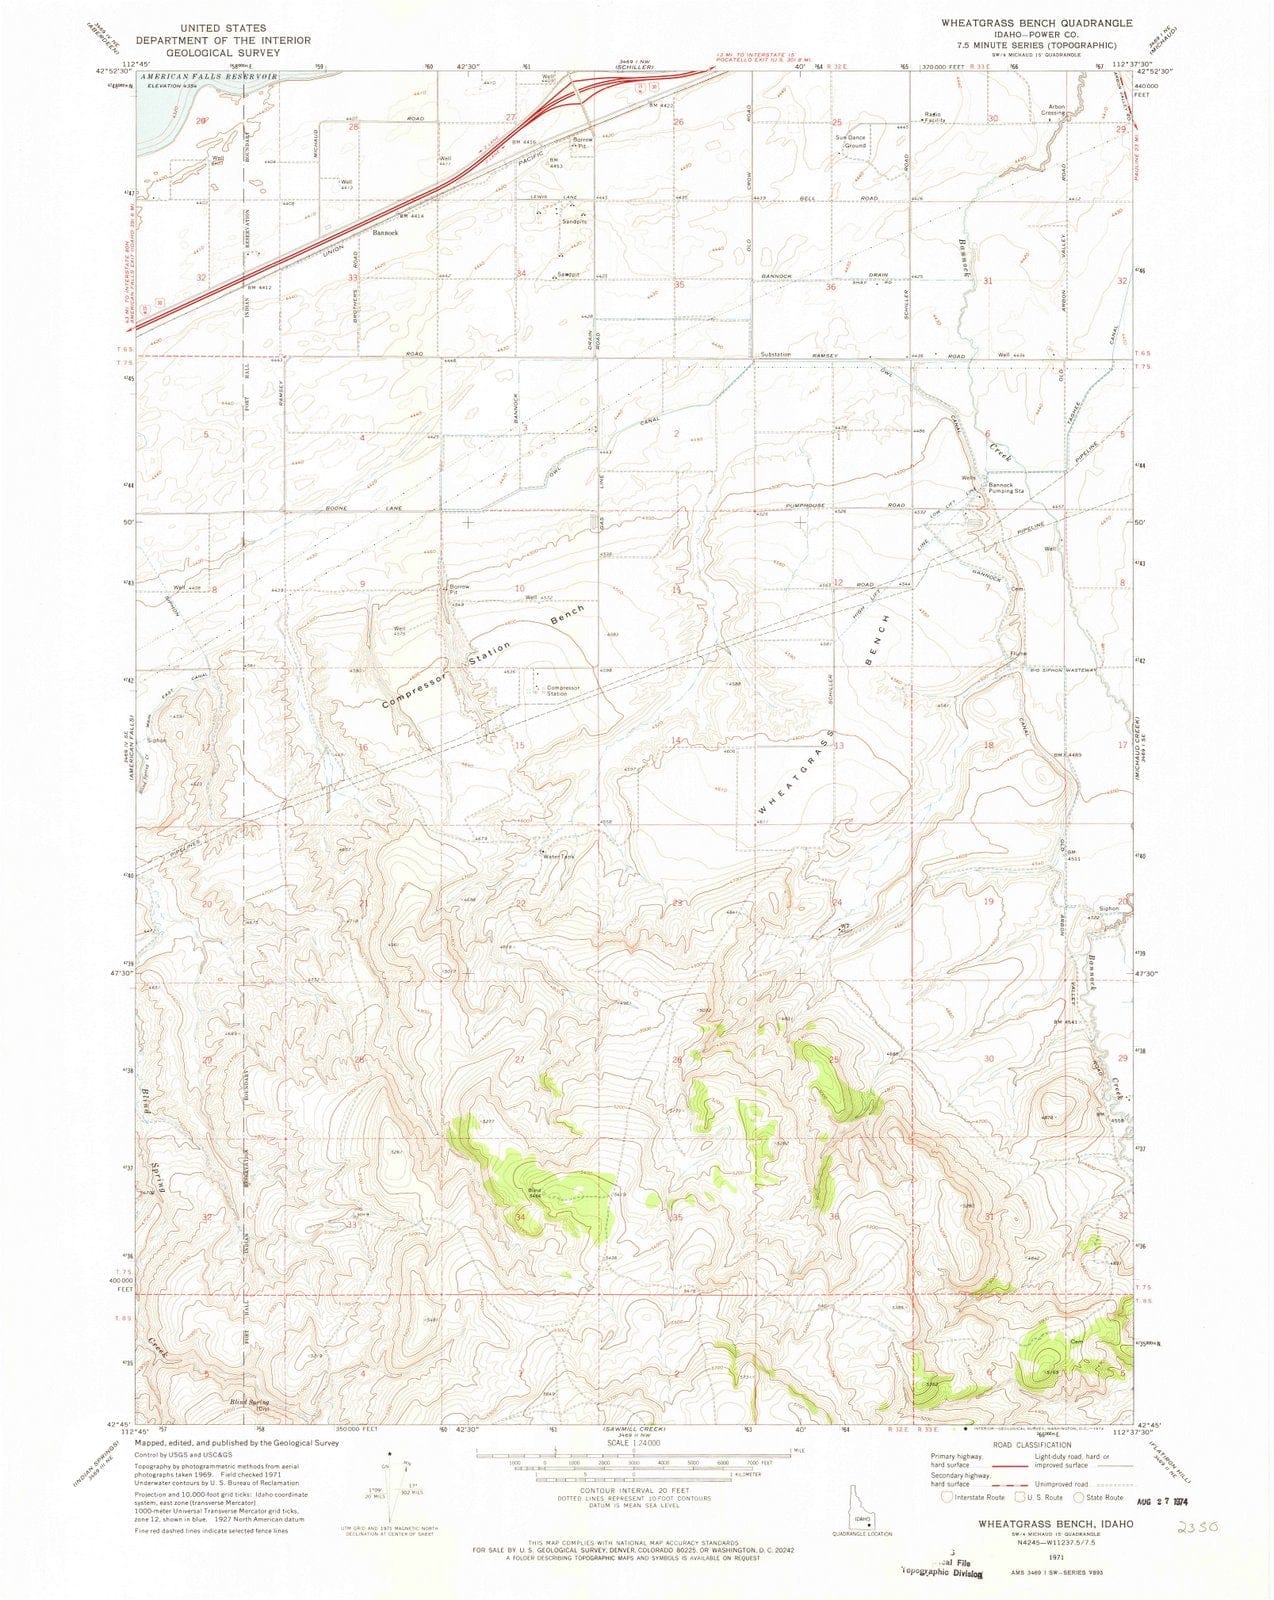 1971 Wheatgrass Bench, ID - Idaho - USGS Topographic Map